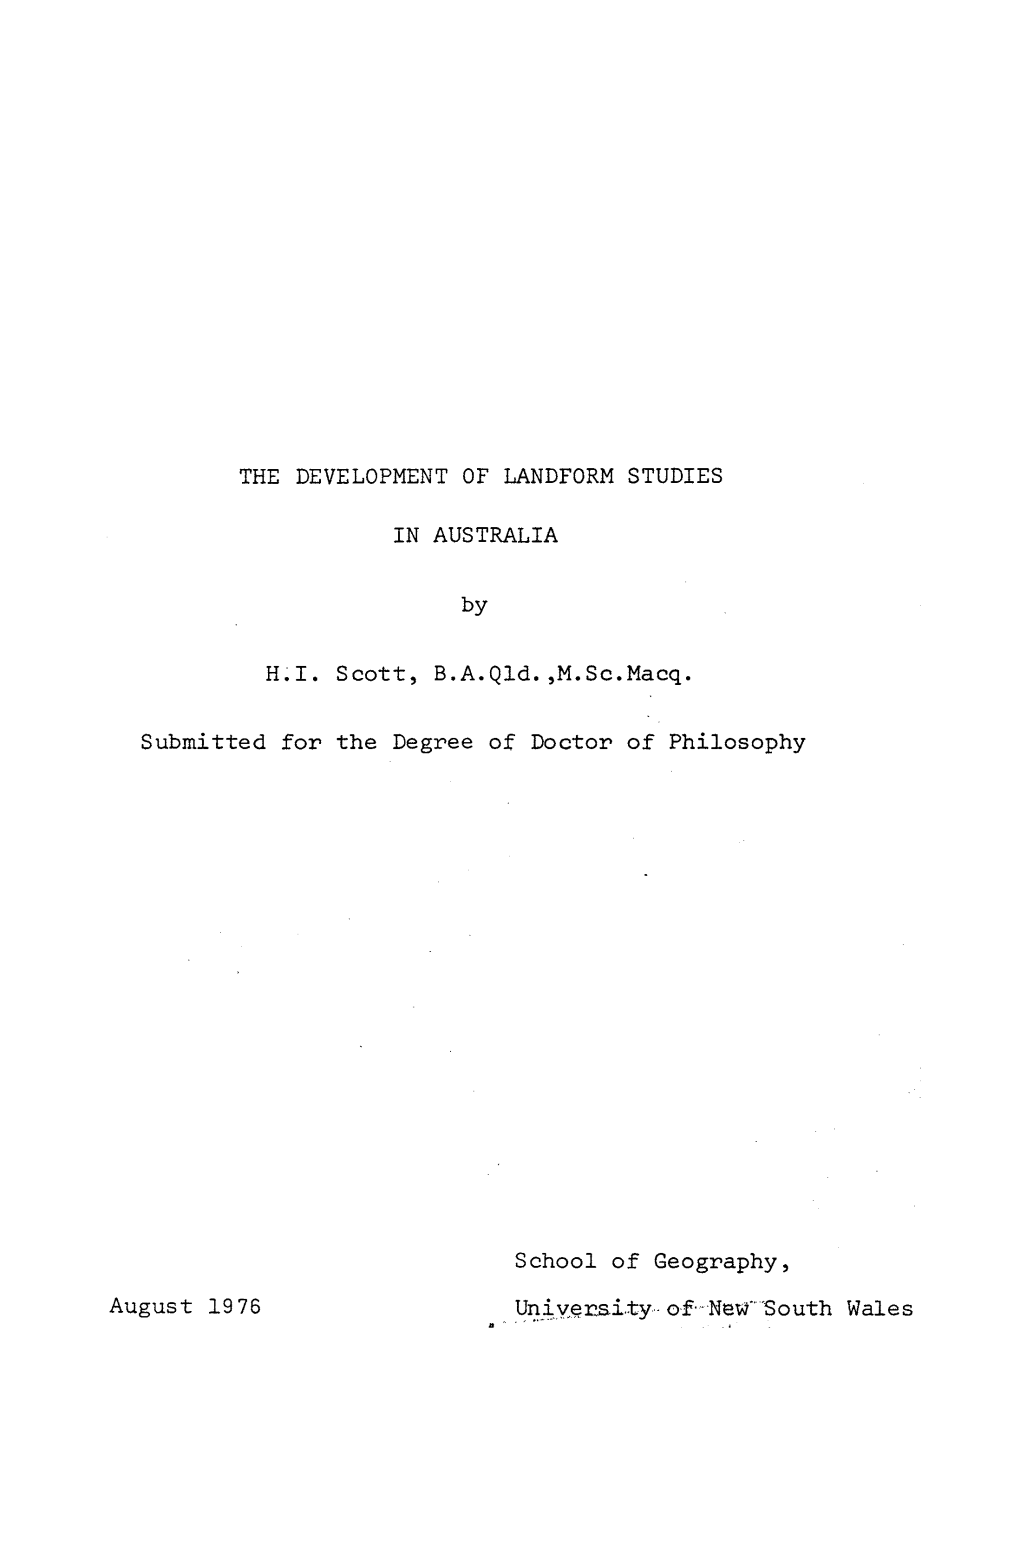 THE DEVELOPMENT of LANDFORM STUDIES in AUSTRALIA by H.I